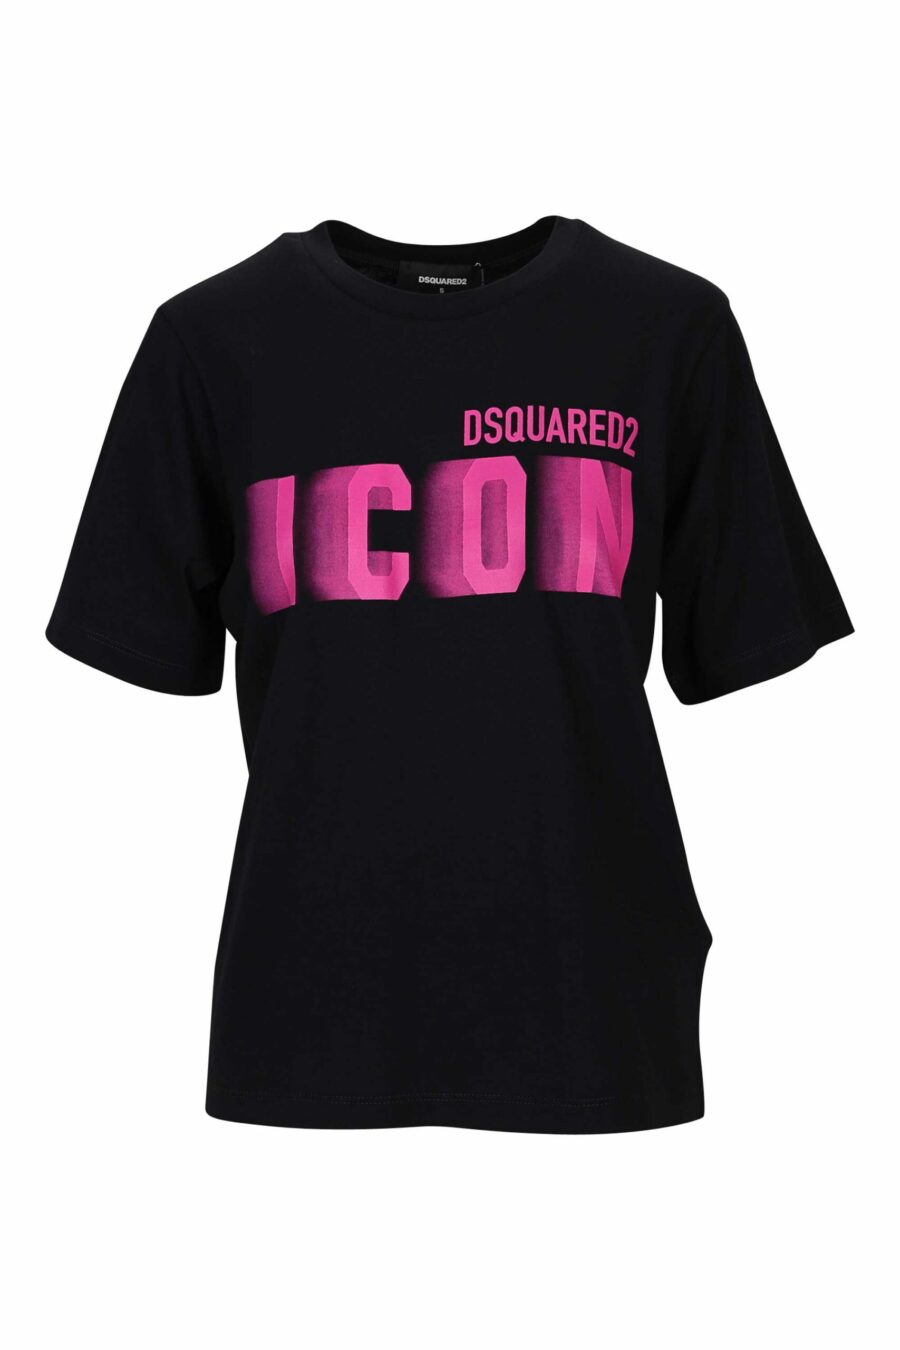 Black T-shirt with fuchsia neon blurred logo - 8054148406530 scaled